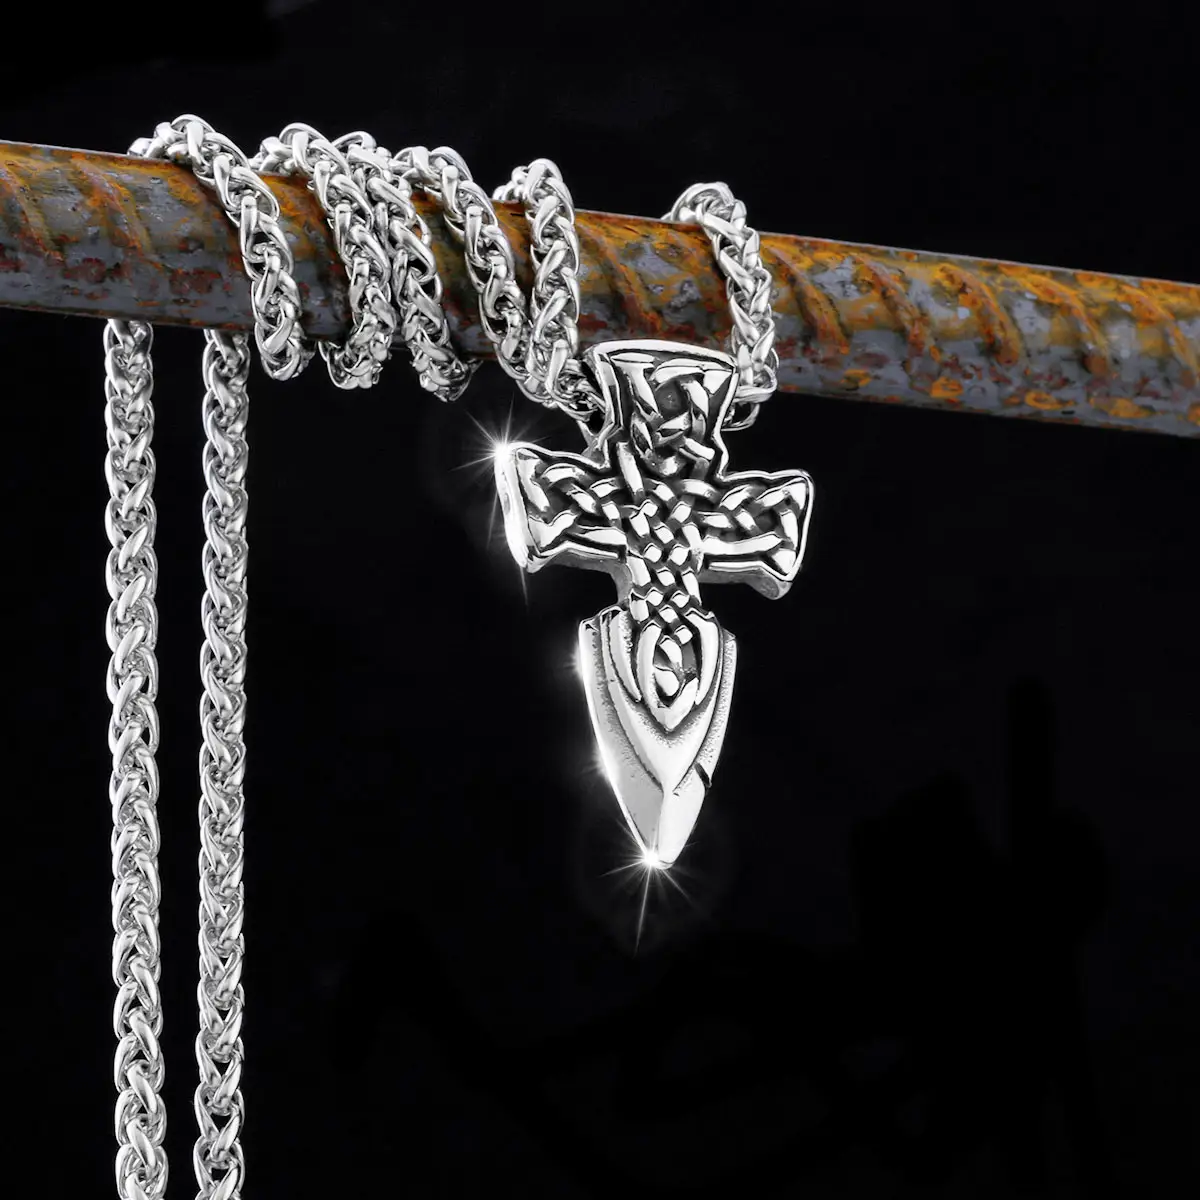 Vikingo Freyr espada Collar para hombre de acero inoxidable celta colgante Punk collar Hip Hop niños bicicleta accesorios al por mayor